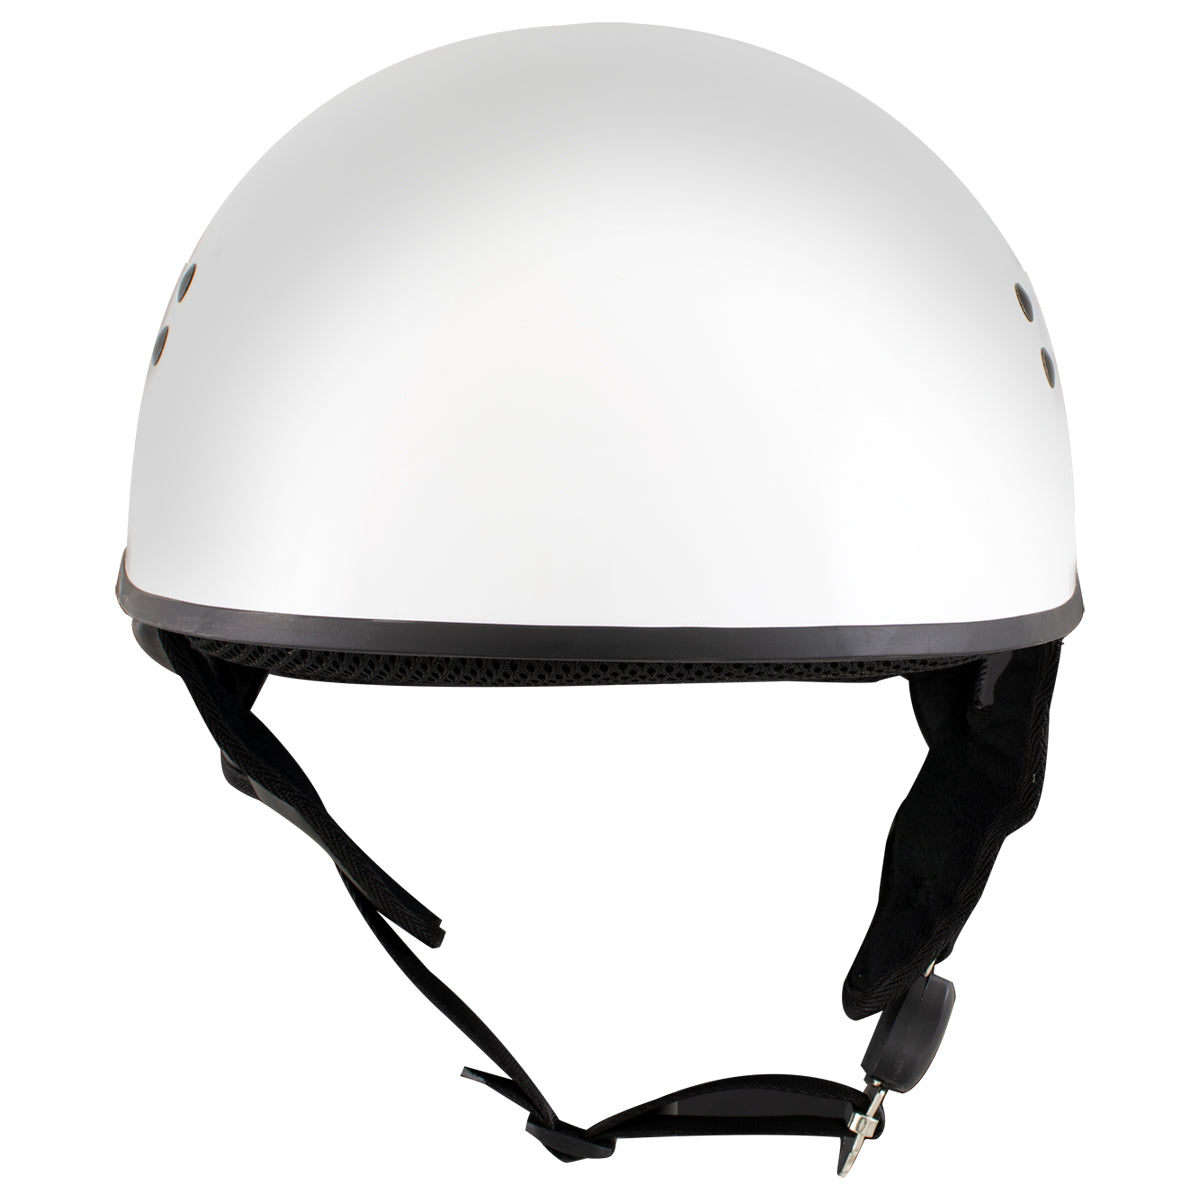 Hot Leathers HLD1050 'Glossy Silver' Motorcycle DOT Skull Cap Helmet